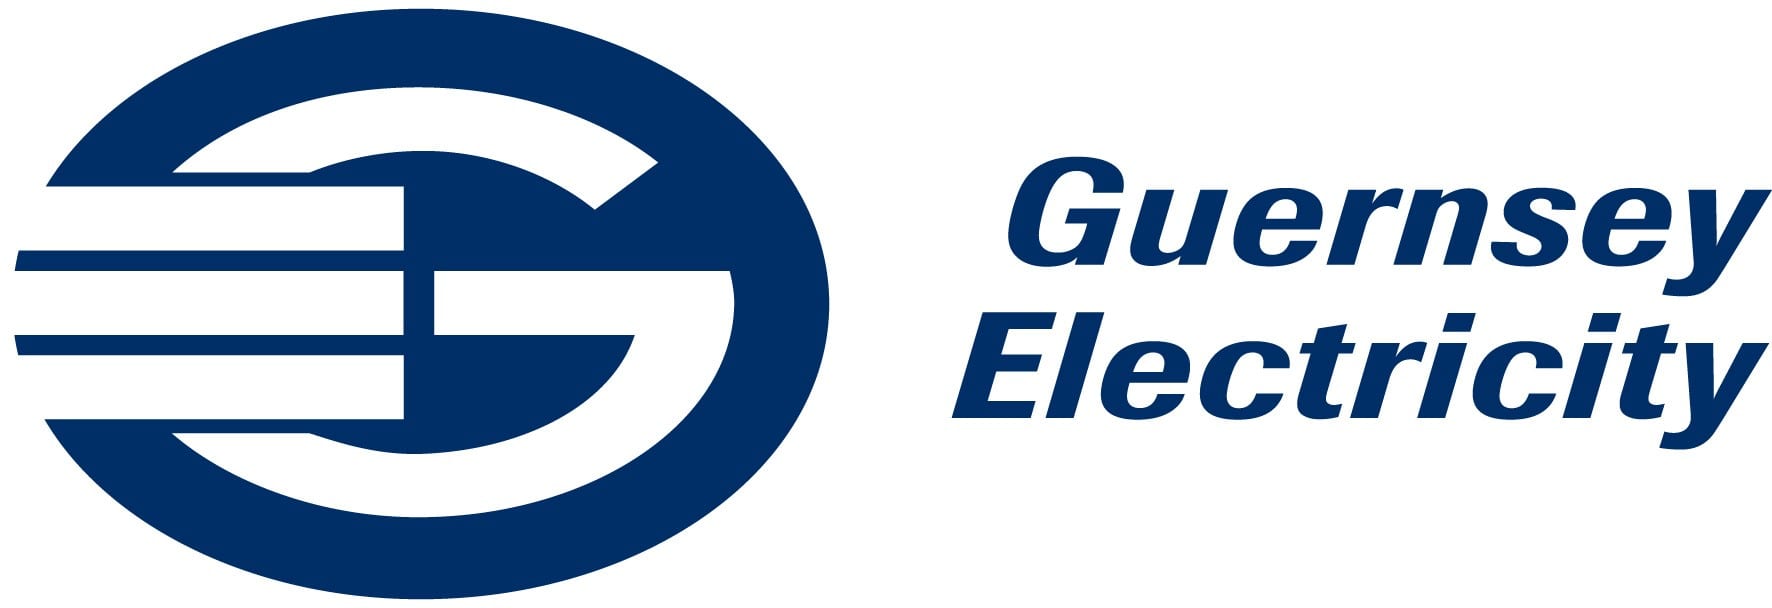 Gsy-Electricity-Logo-1.jpg